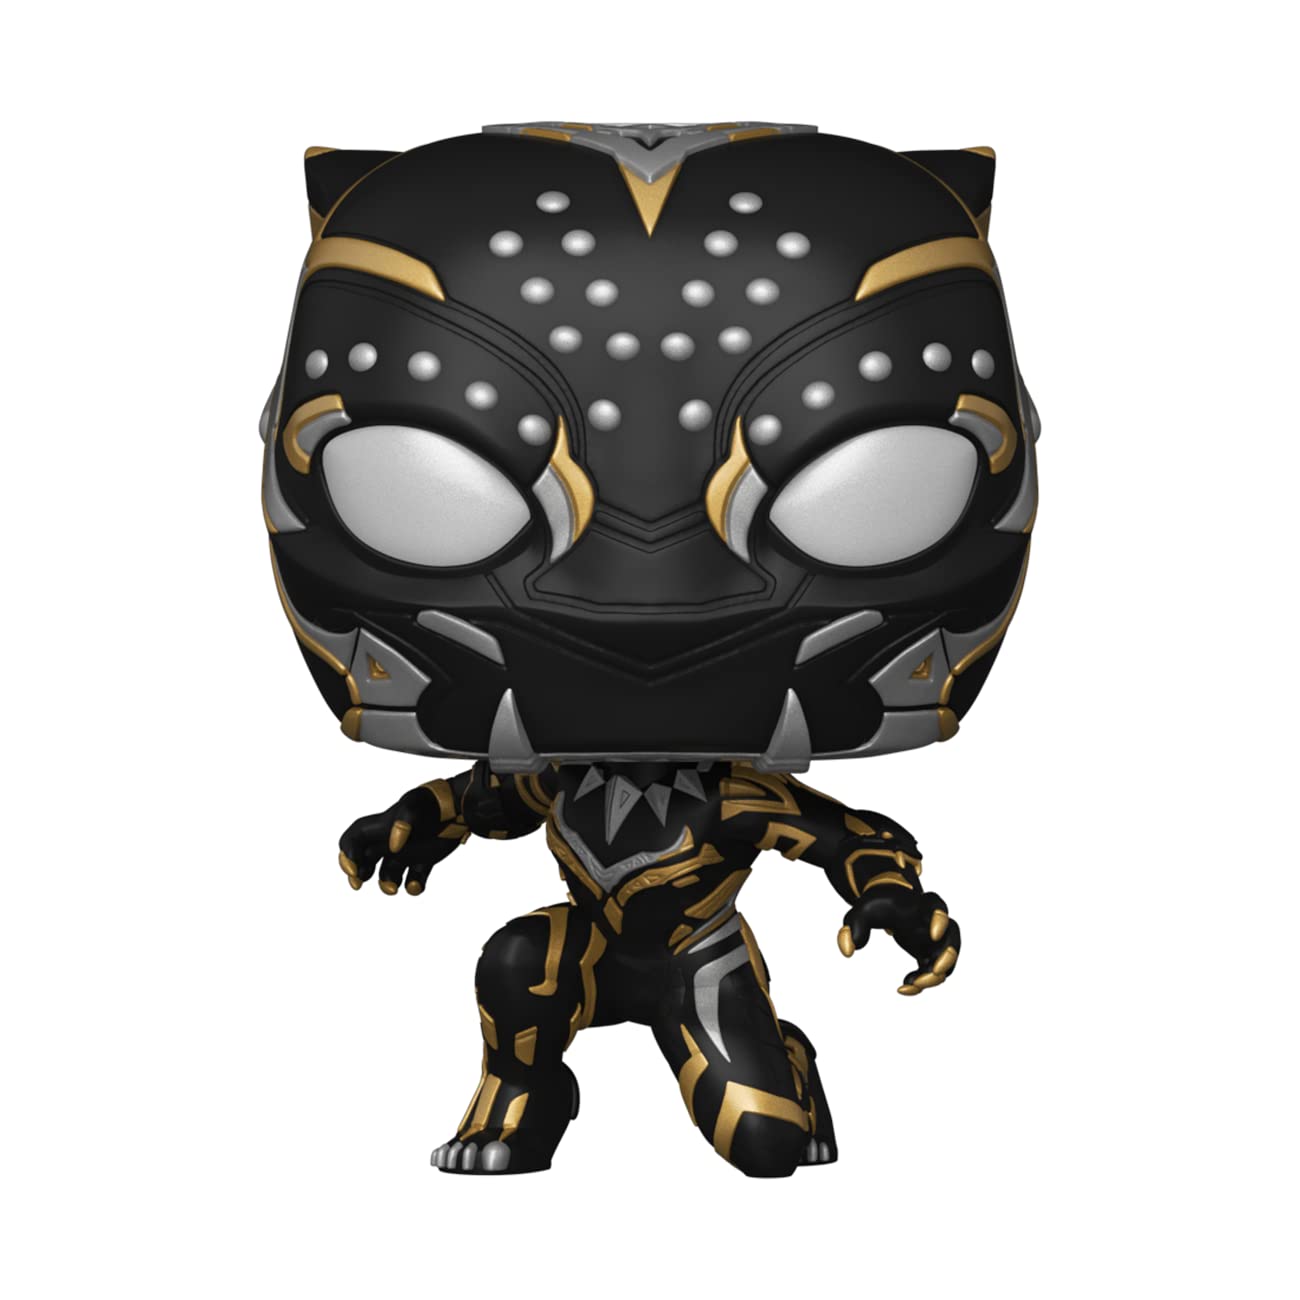 Funko Pop Marvel: Black Panther - Wakanda Forever, Black Panther